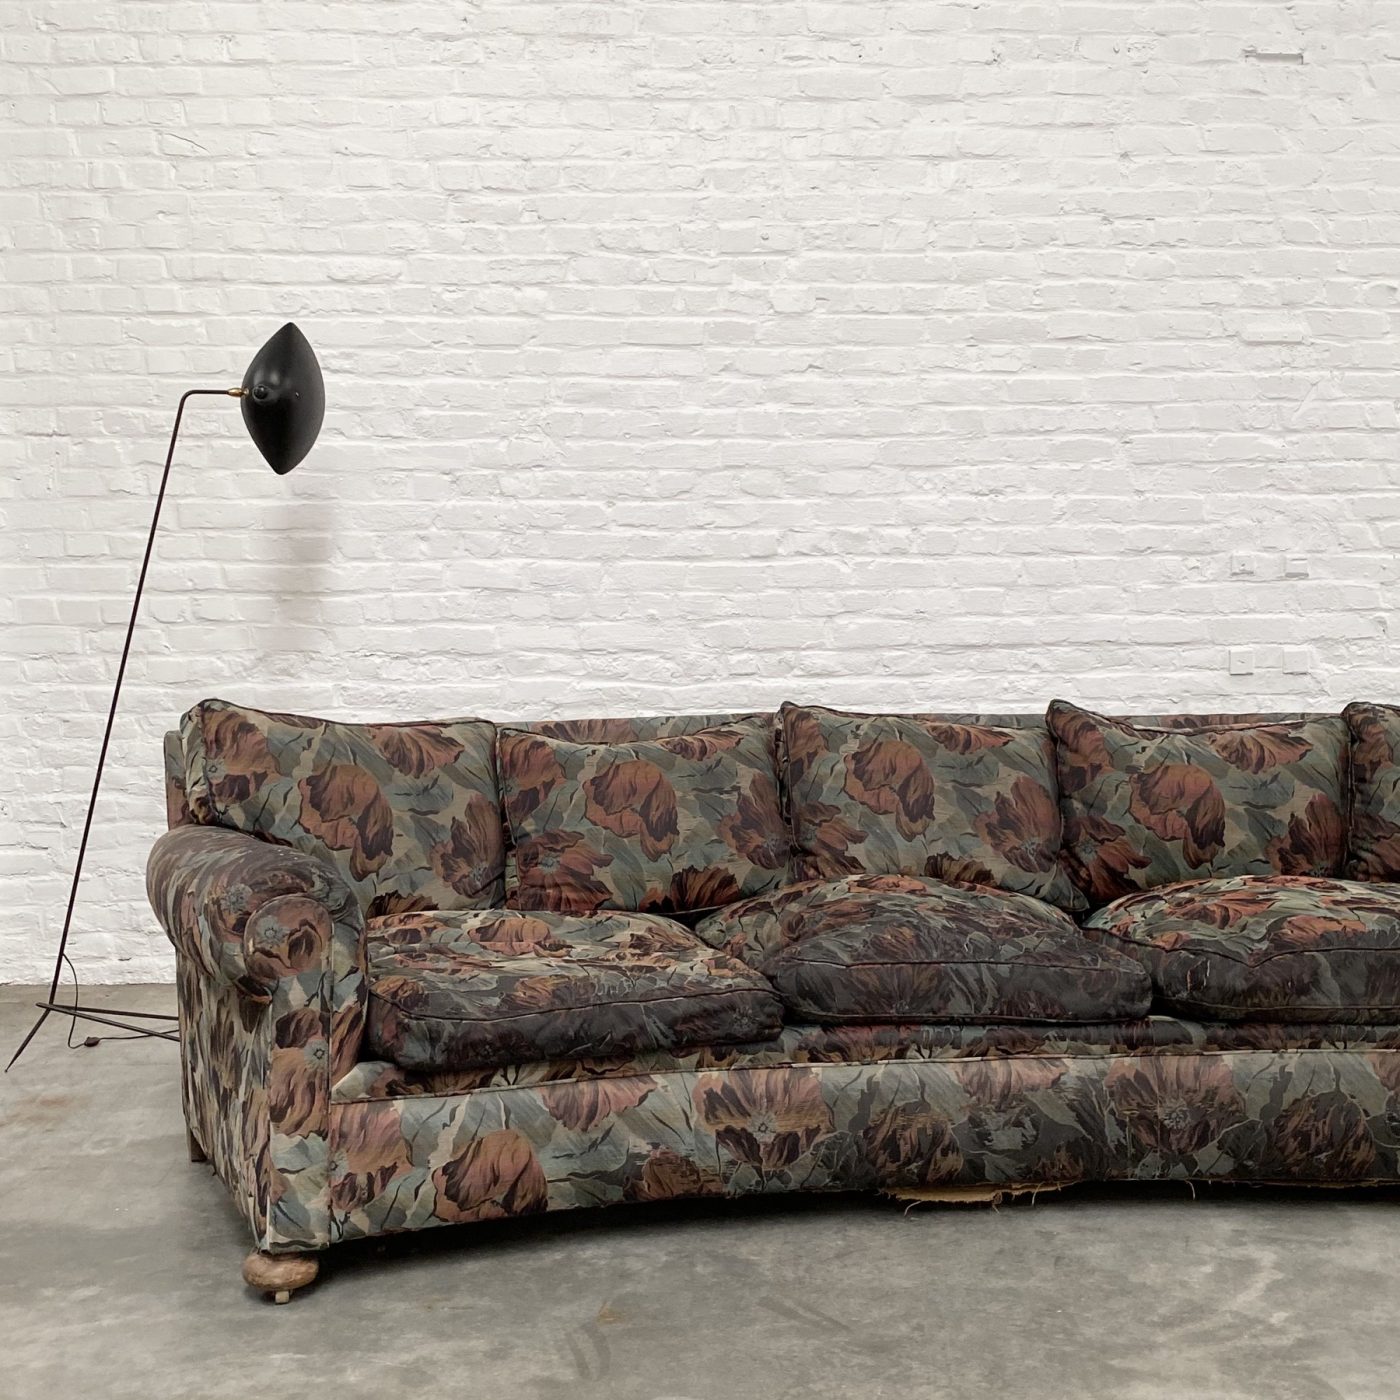 objet-vagabond-huge-sofa0001